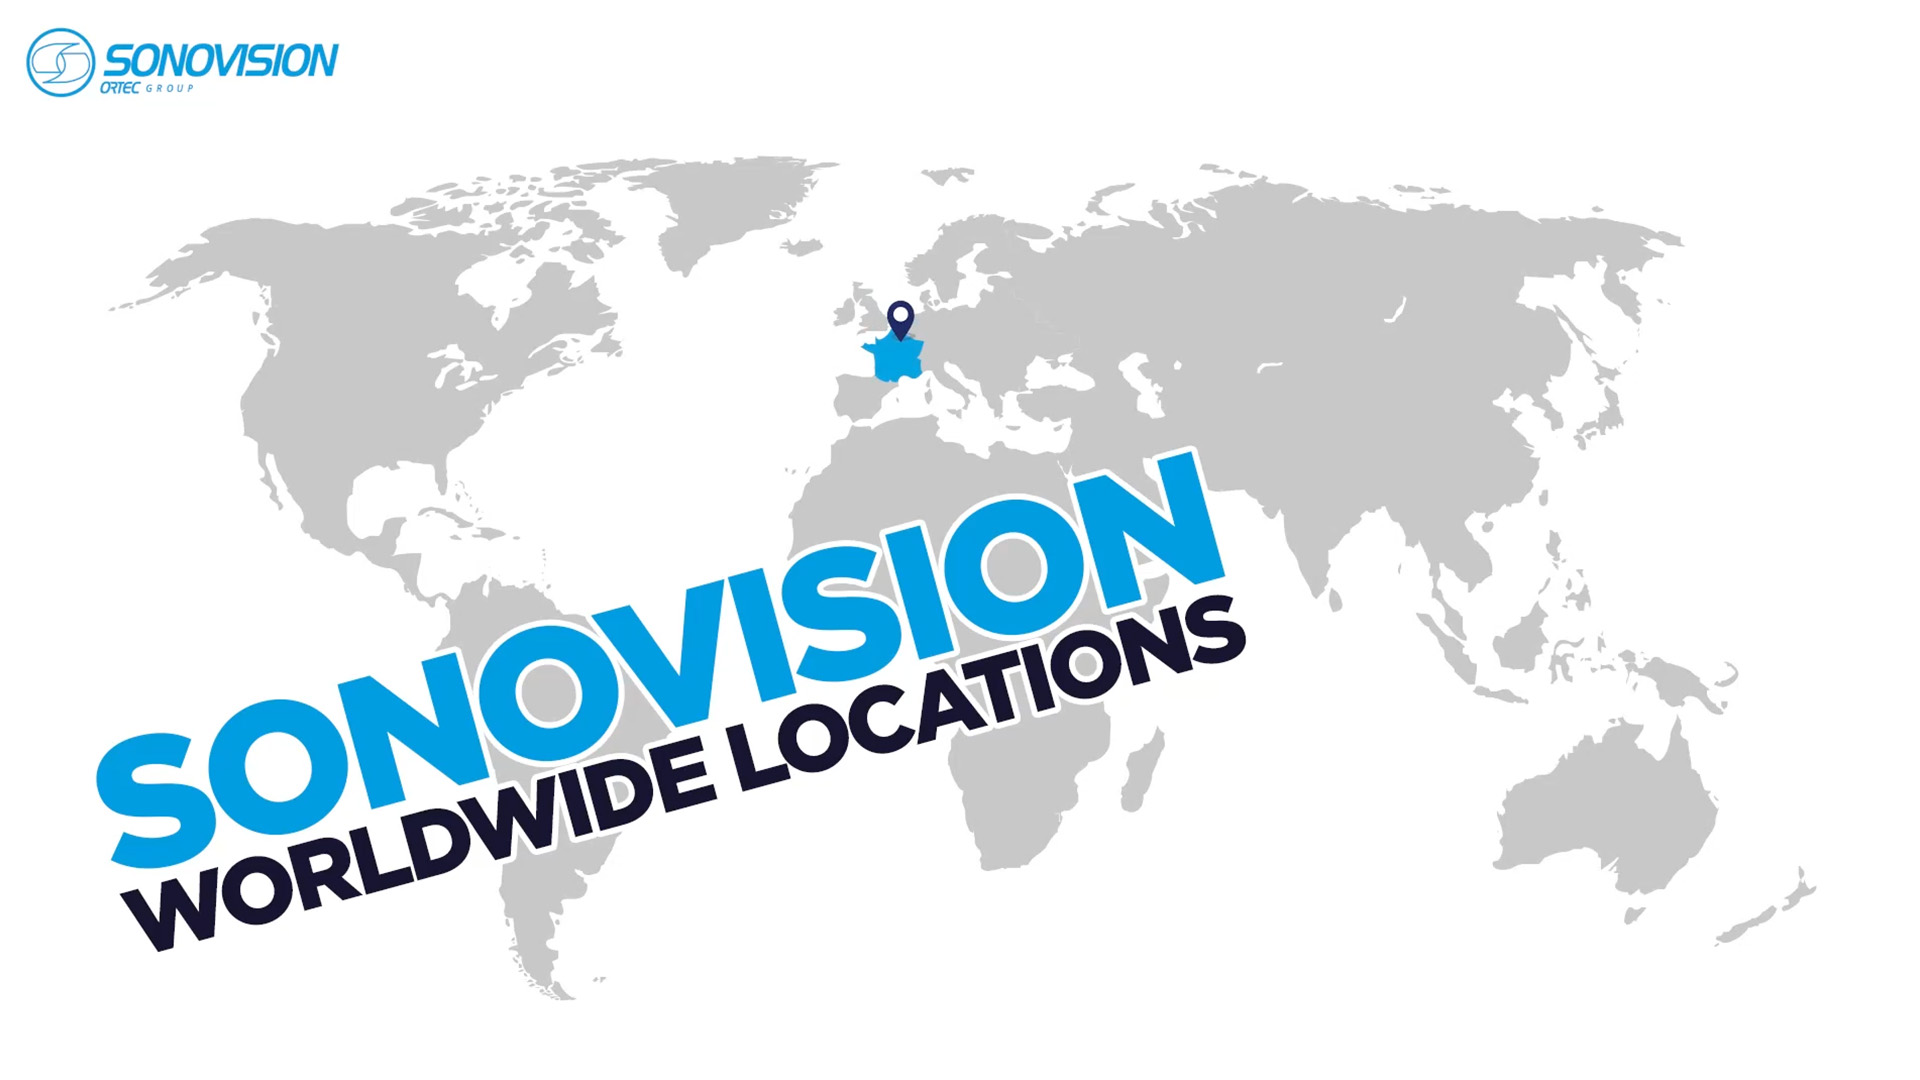 sonovision worldwide locations map